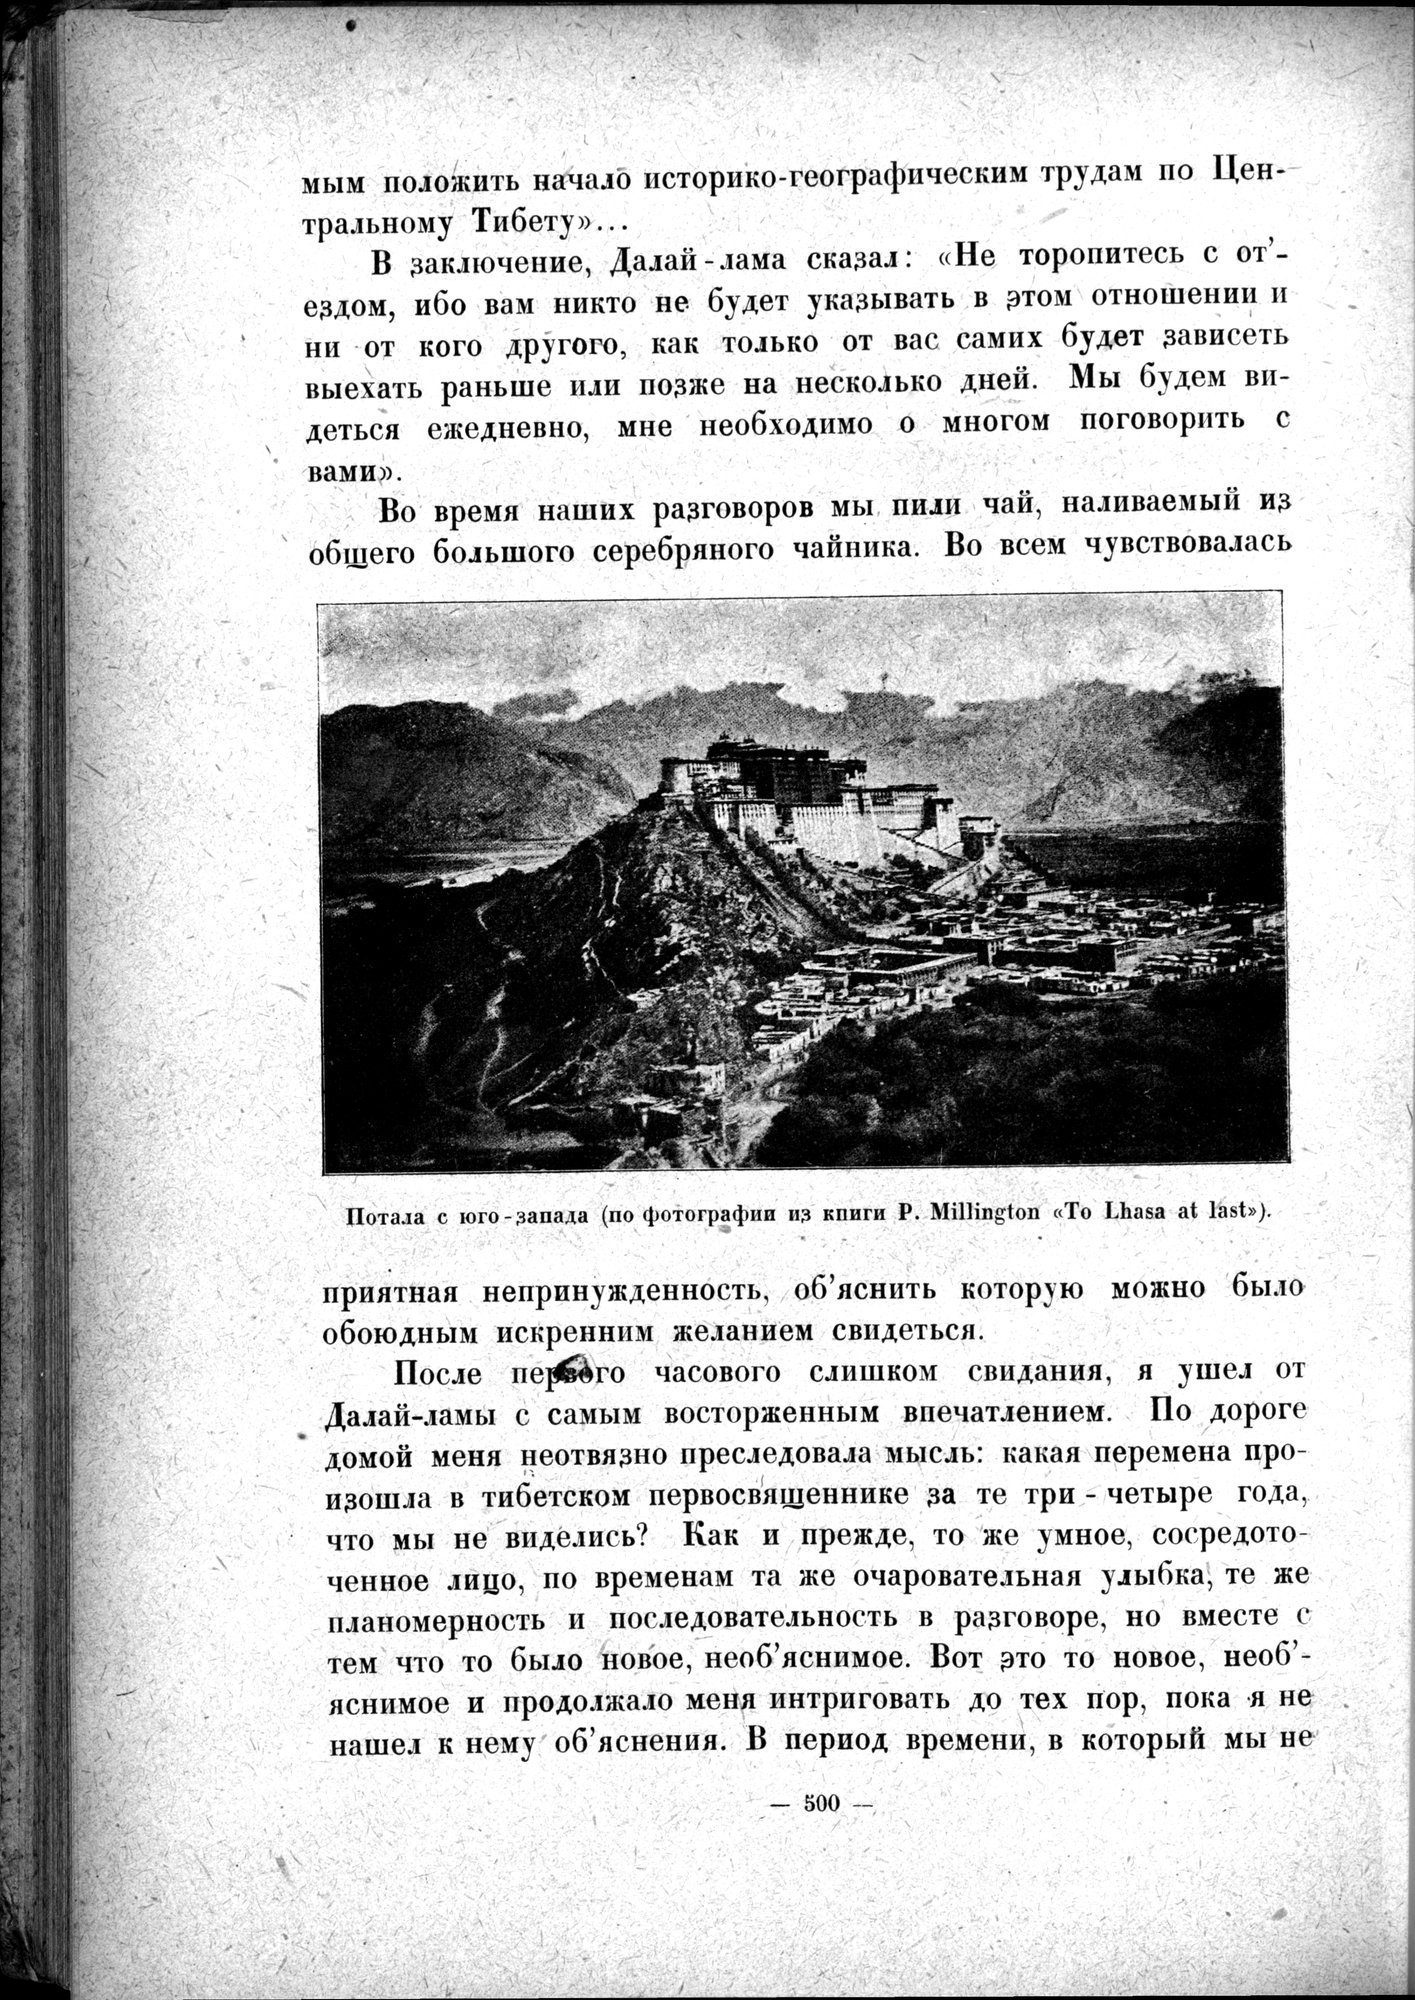 Mongoliya i Amdo i mertby gorod Khara-Khoto : vol.1 / Page 572 (Grayscale High Resolution Image)